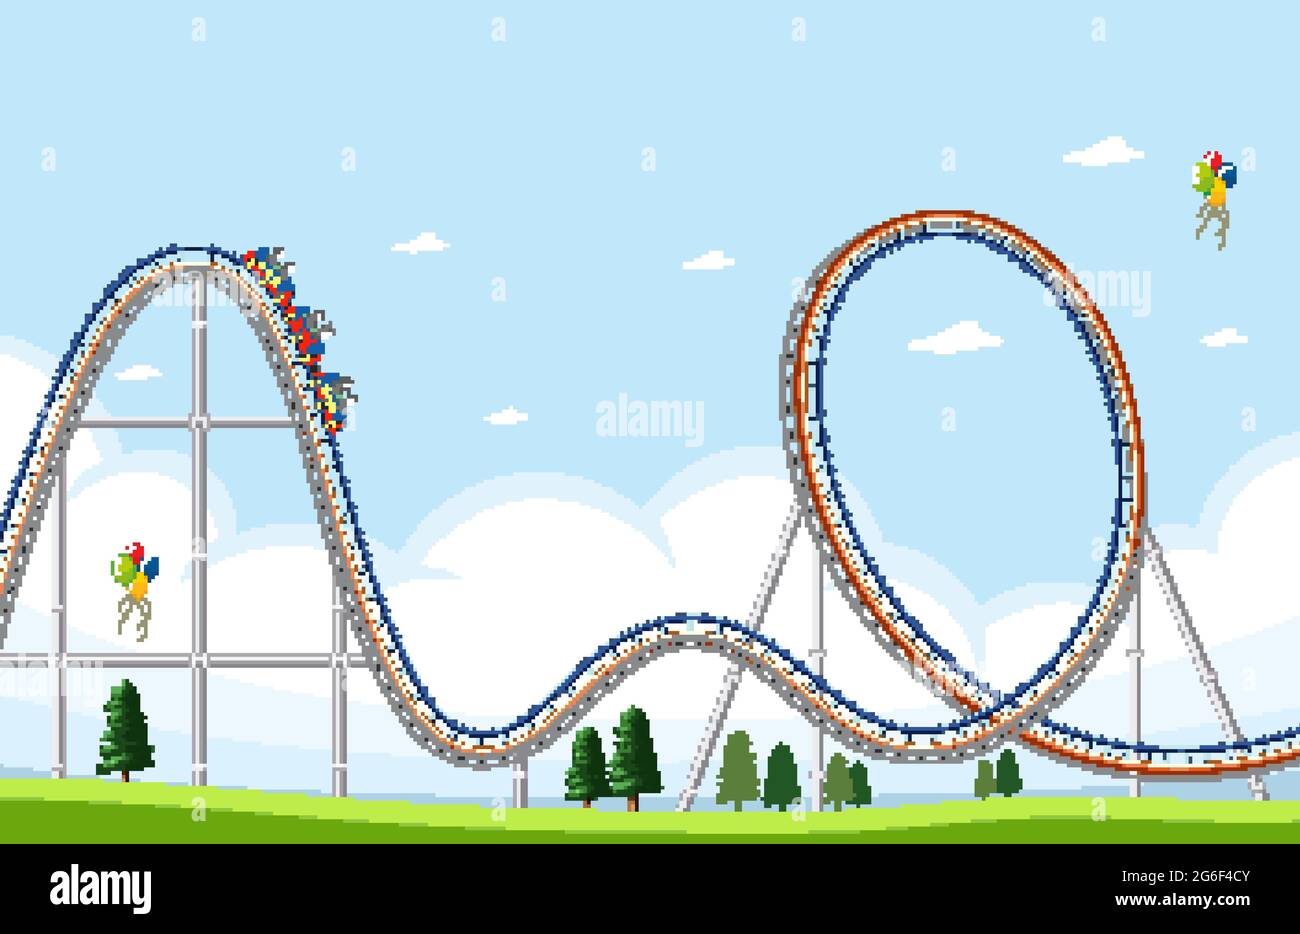 Amusement park scene with roller coaster illustration Stock Vector ...